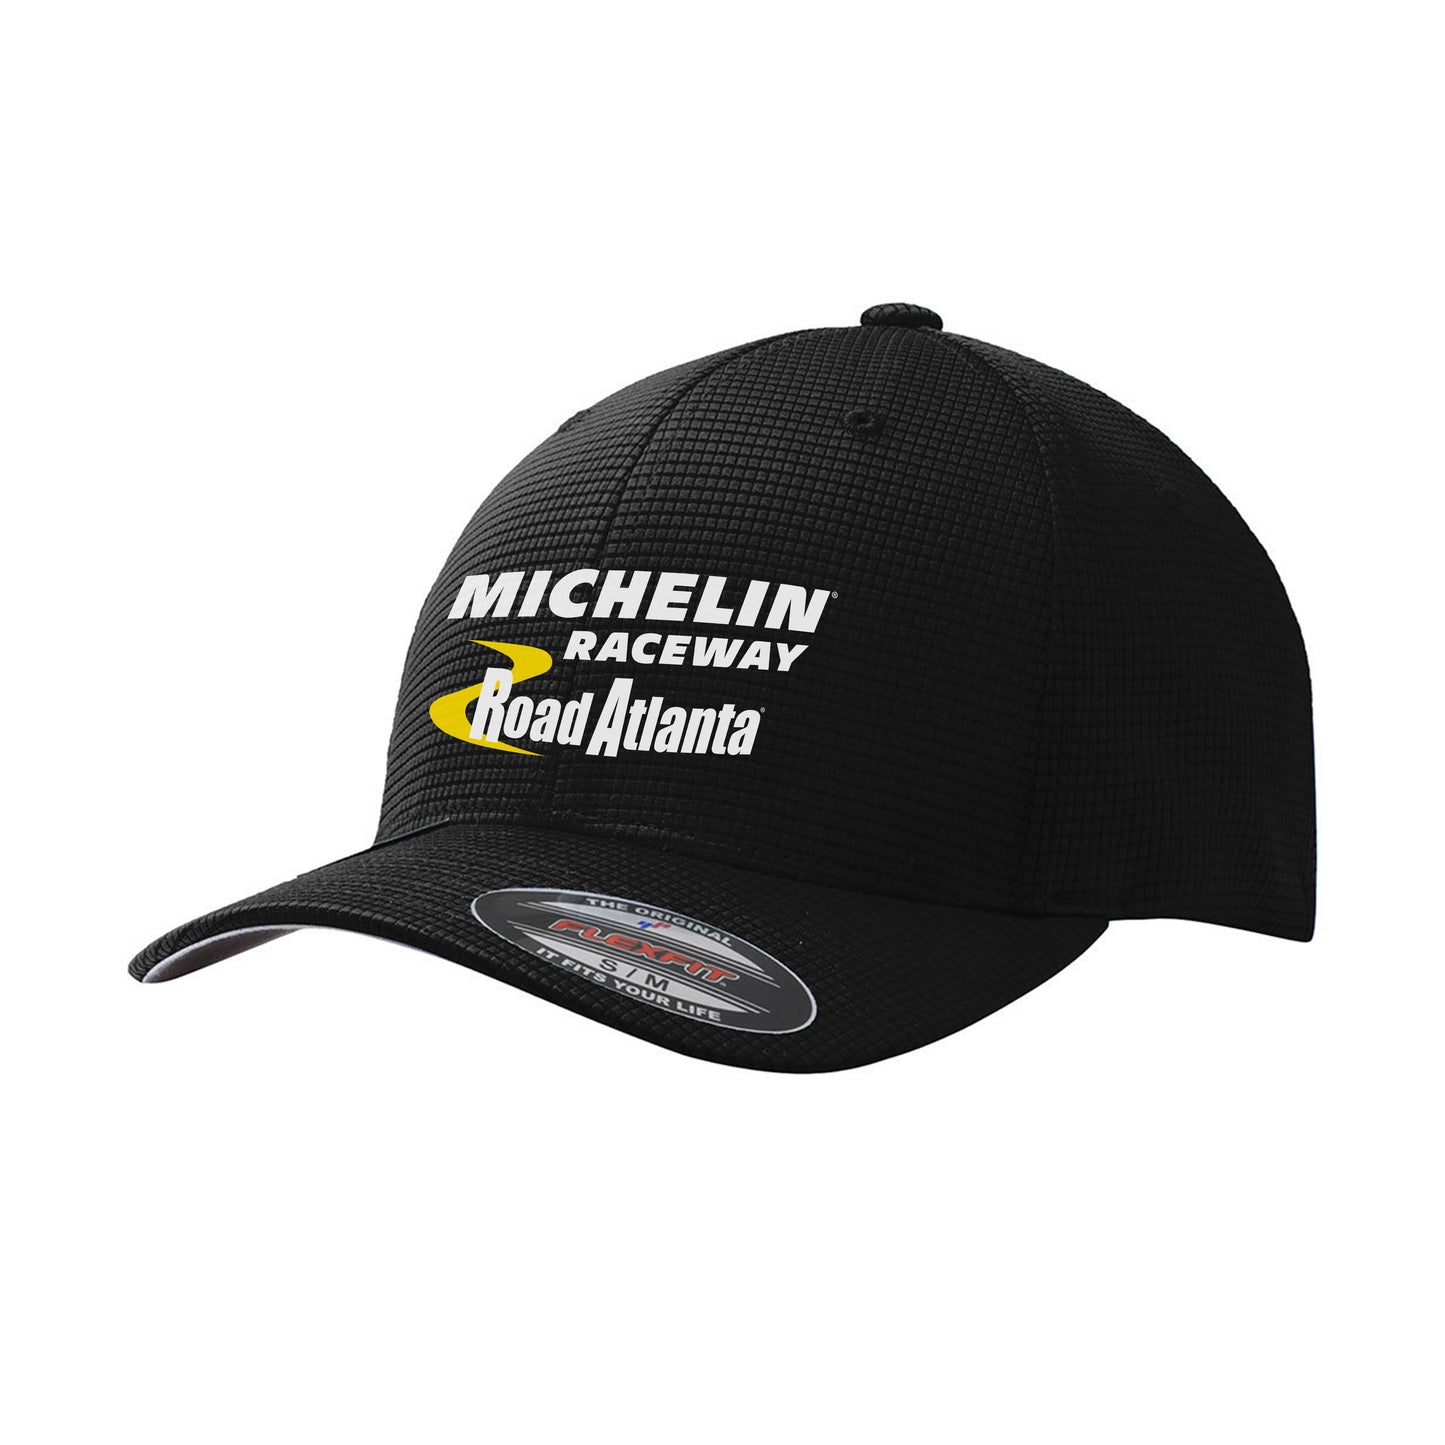 Michelin Raceway Road Atlanta Flexfit Hat - Black